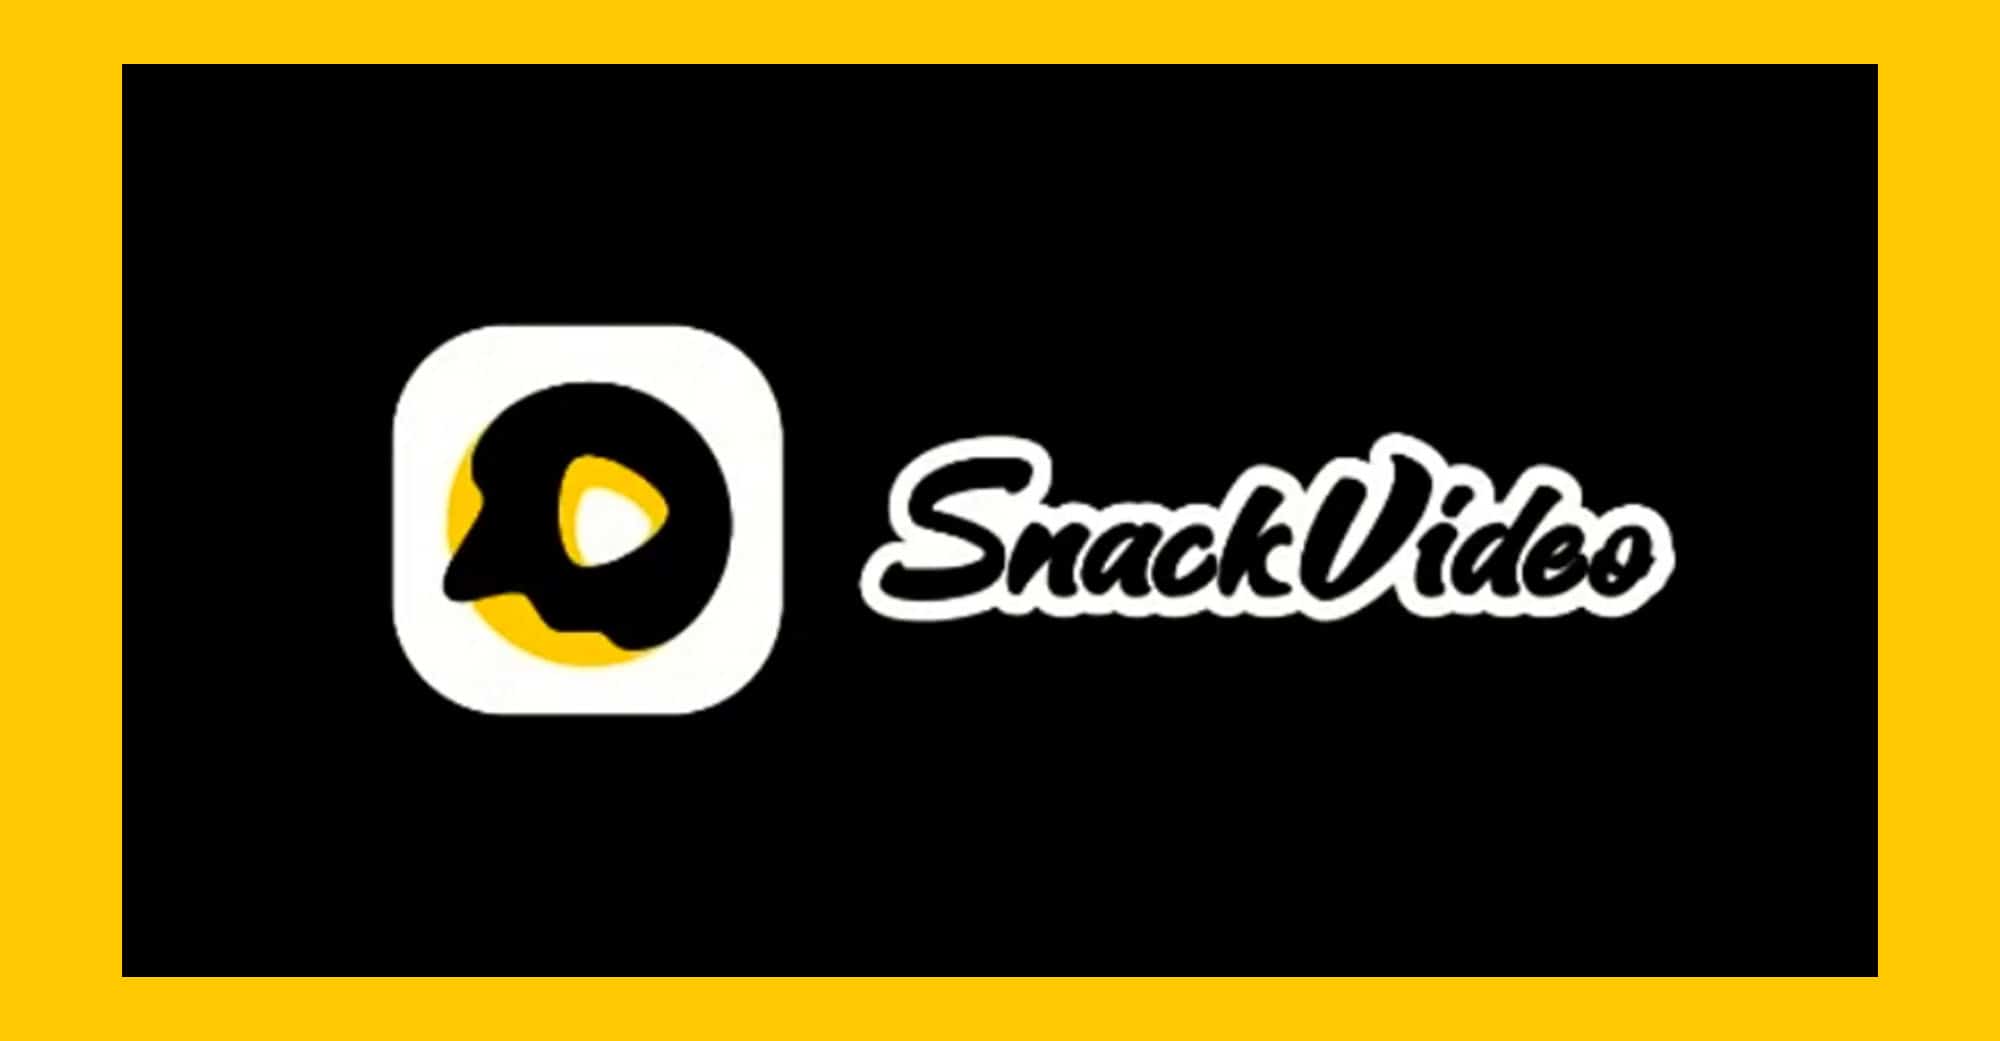 snackvideo-apk-and-split-apks